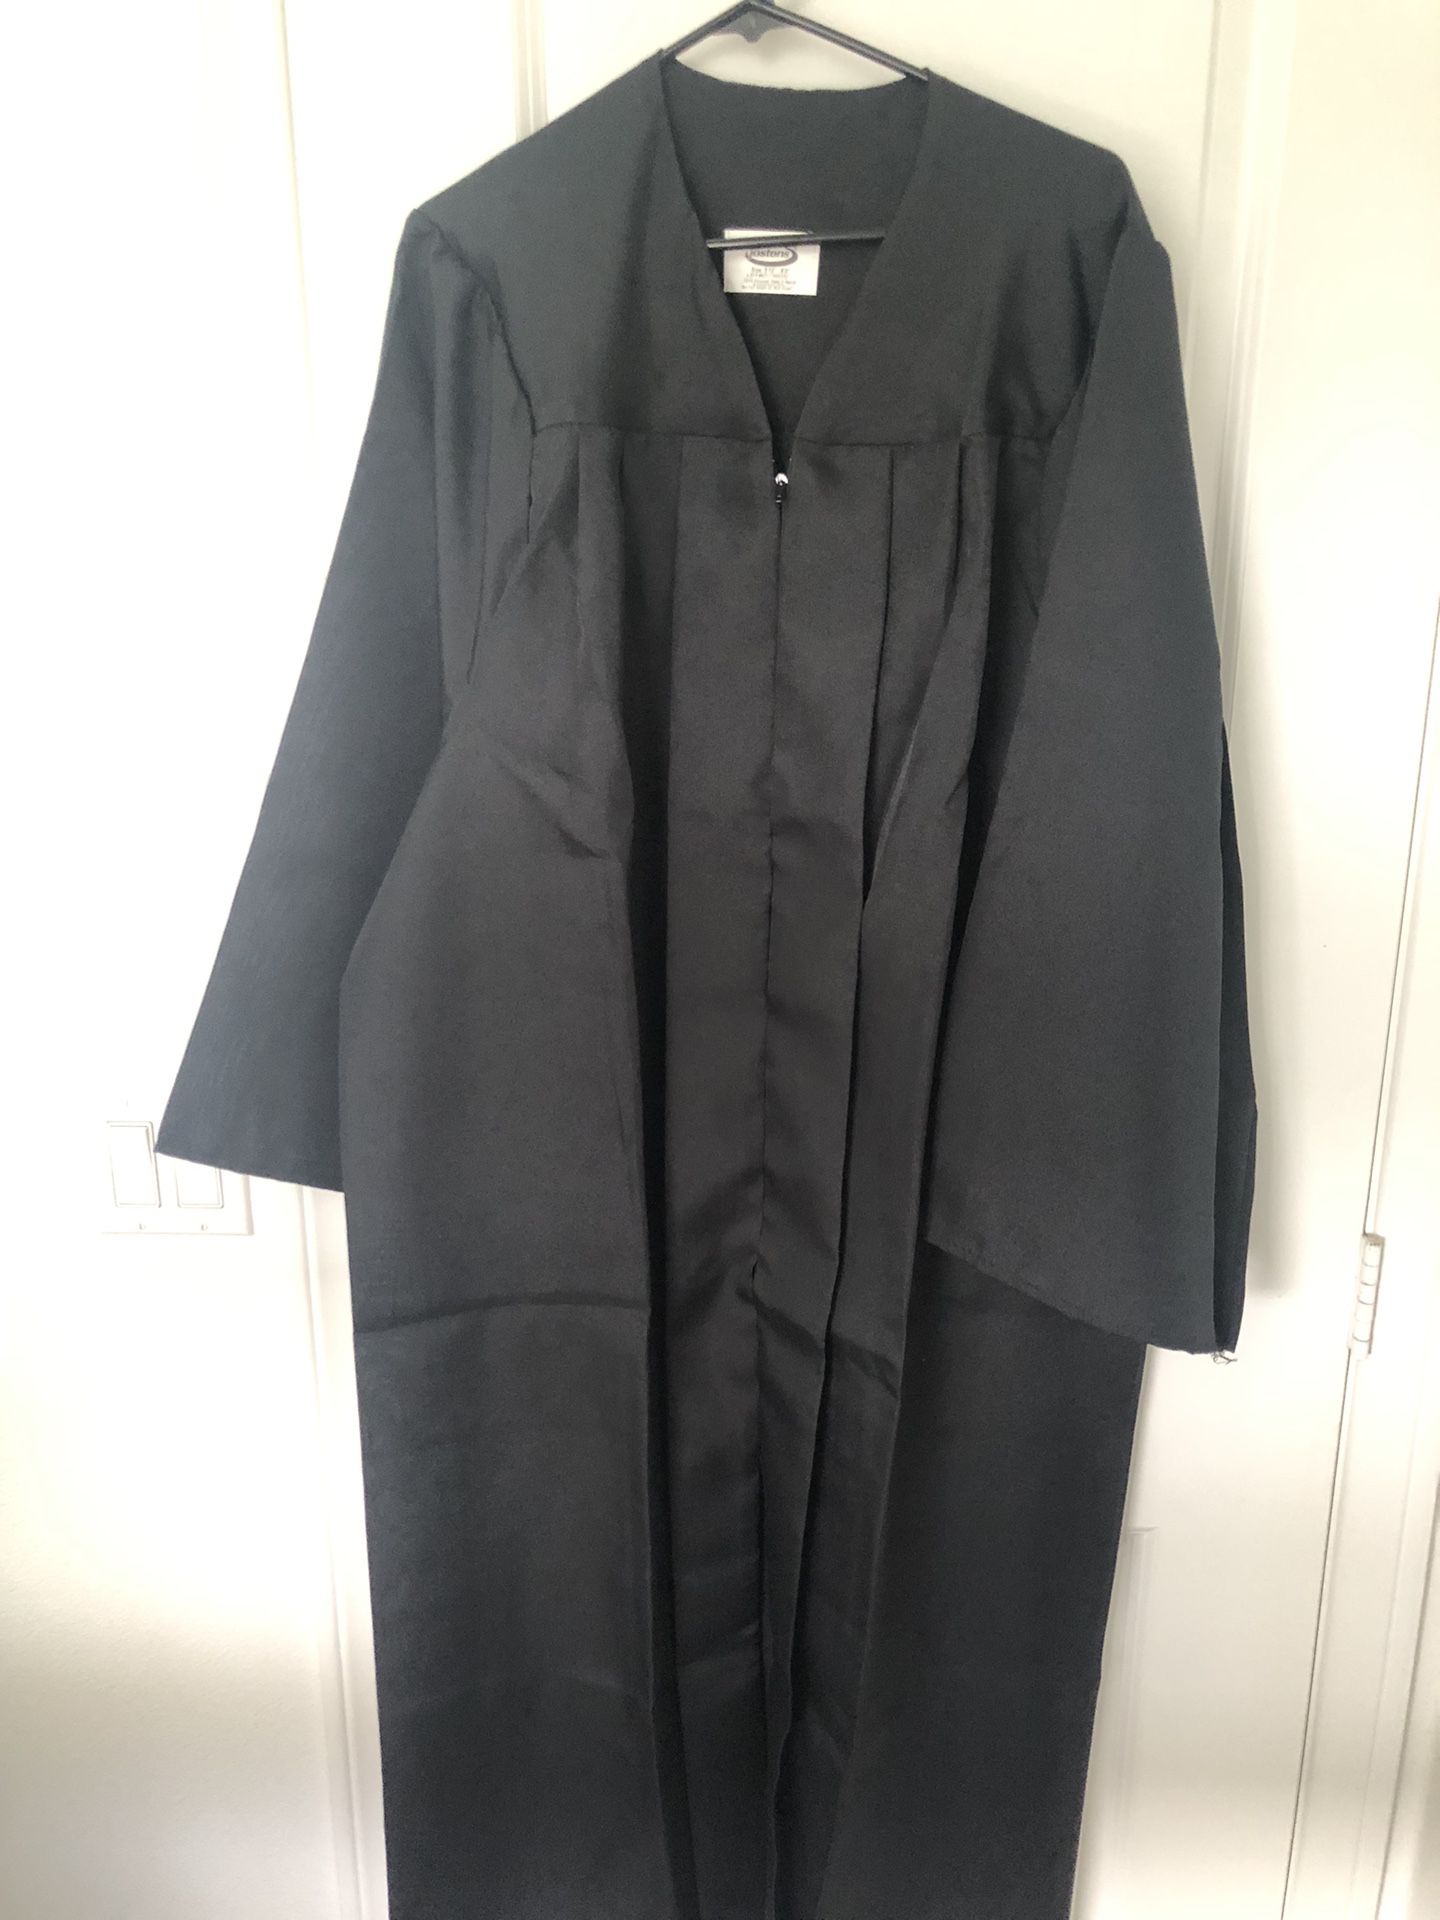 Jostens Graduation Gown